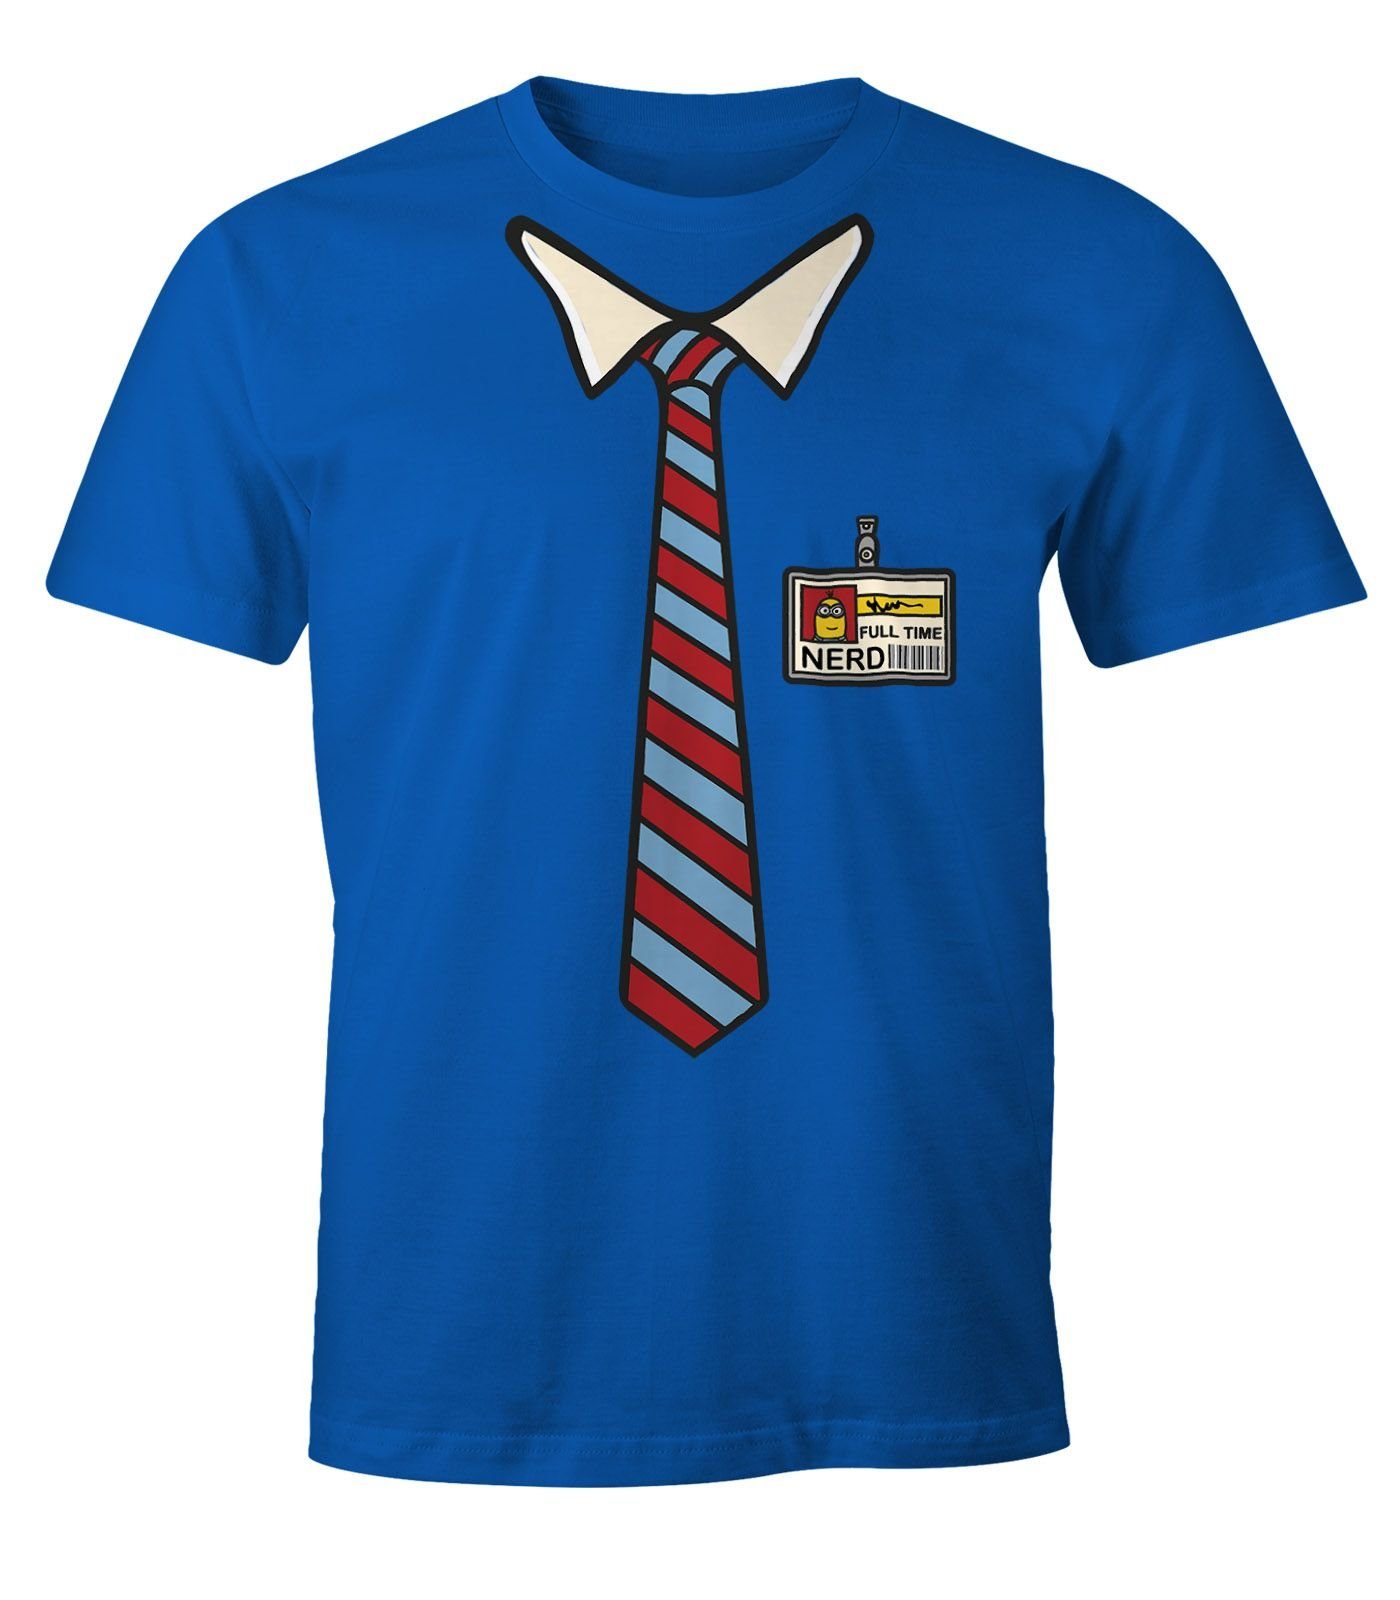 MoonWorks Print-Shirt Herren T-Shirt Full Fun-Shirt Moonworks® mit Print blau Nerd Time Geek